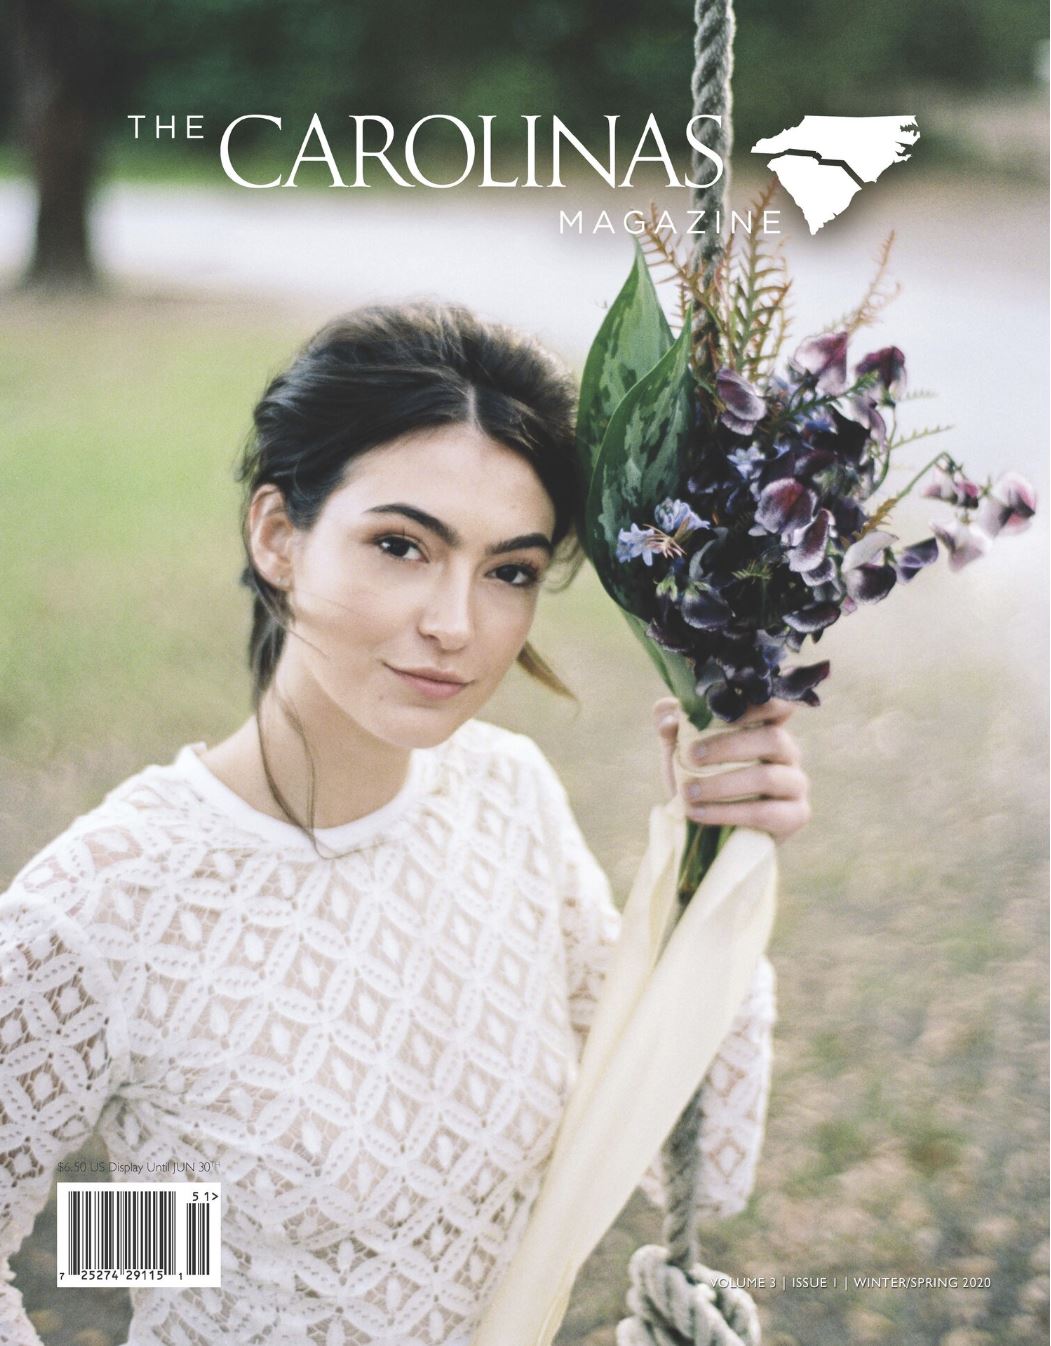 brian d smith carolinas magazine winter spring 2020 cover wingate bridal portrait haylee michalski in sweet caroline styles bodysuit with purple bouquet